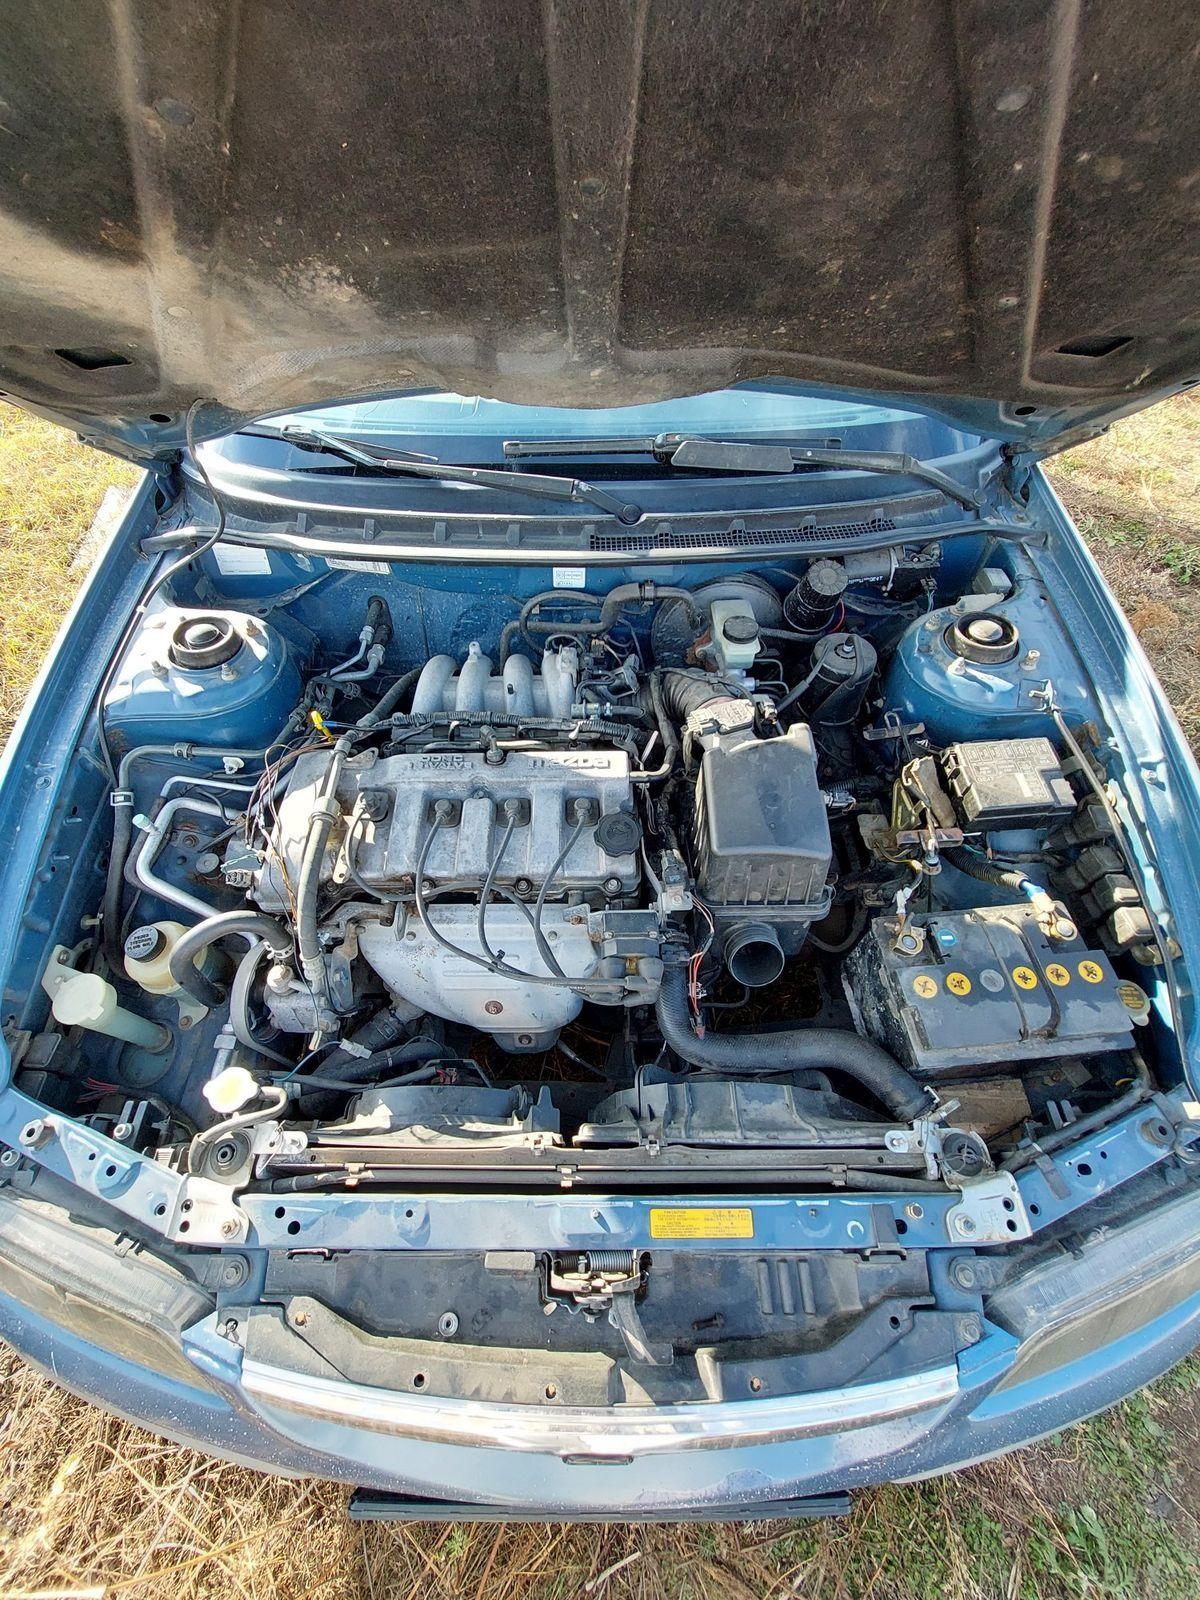 Какой тип двигателя у Mazda 626 / Мазда 626?